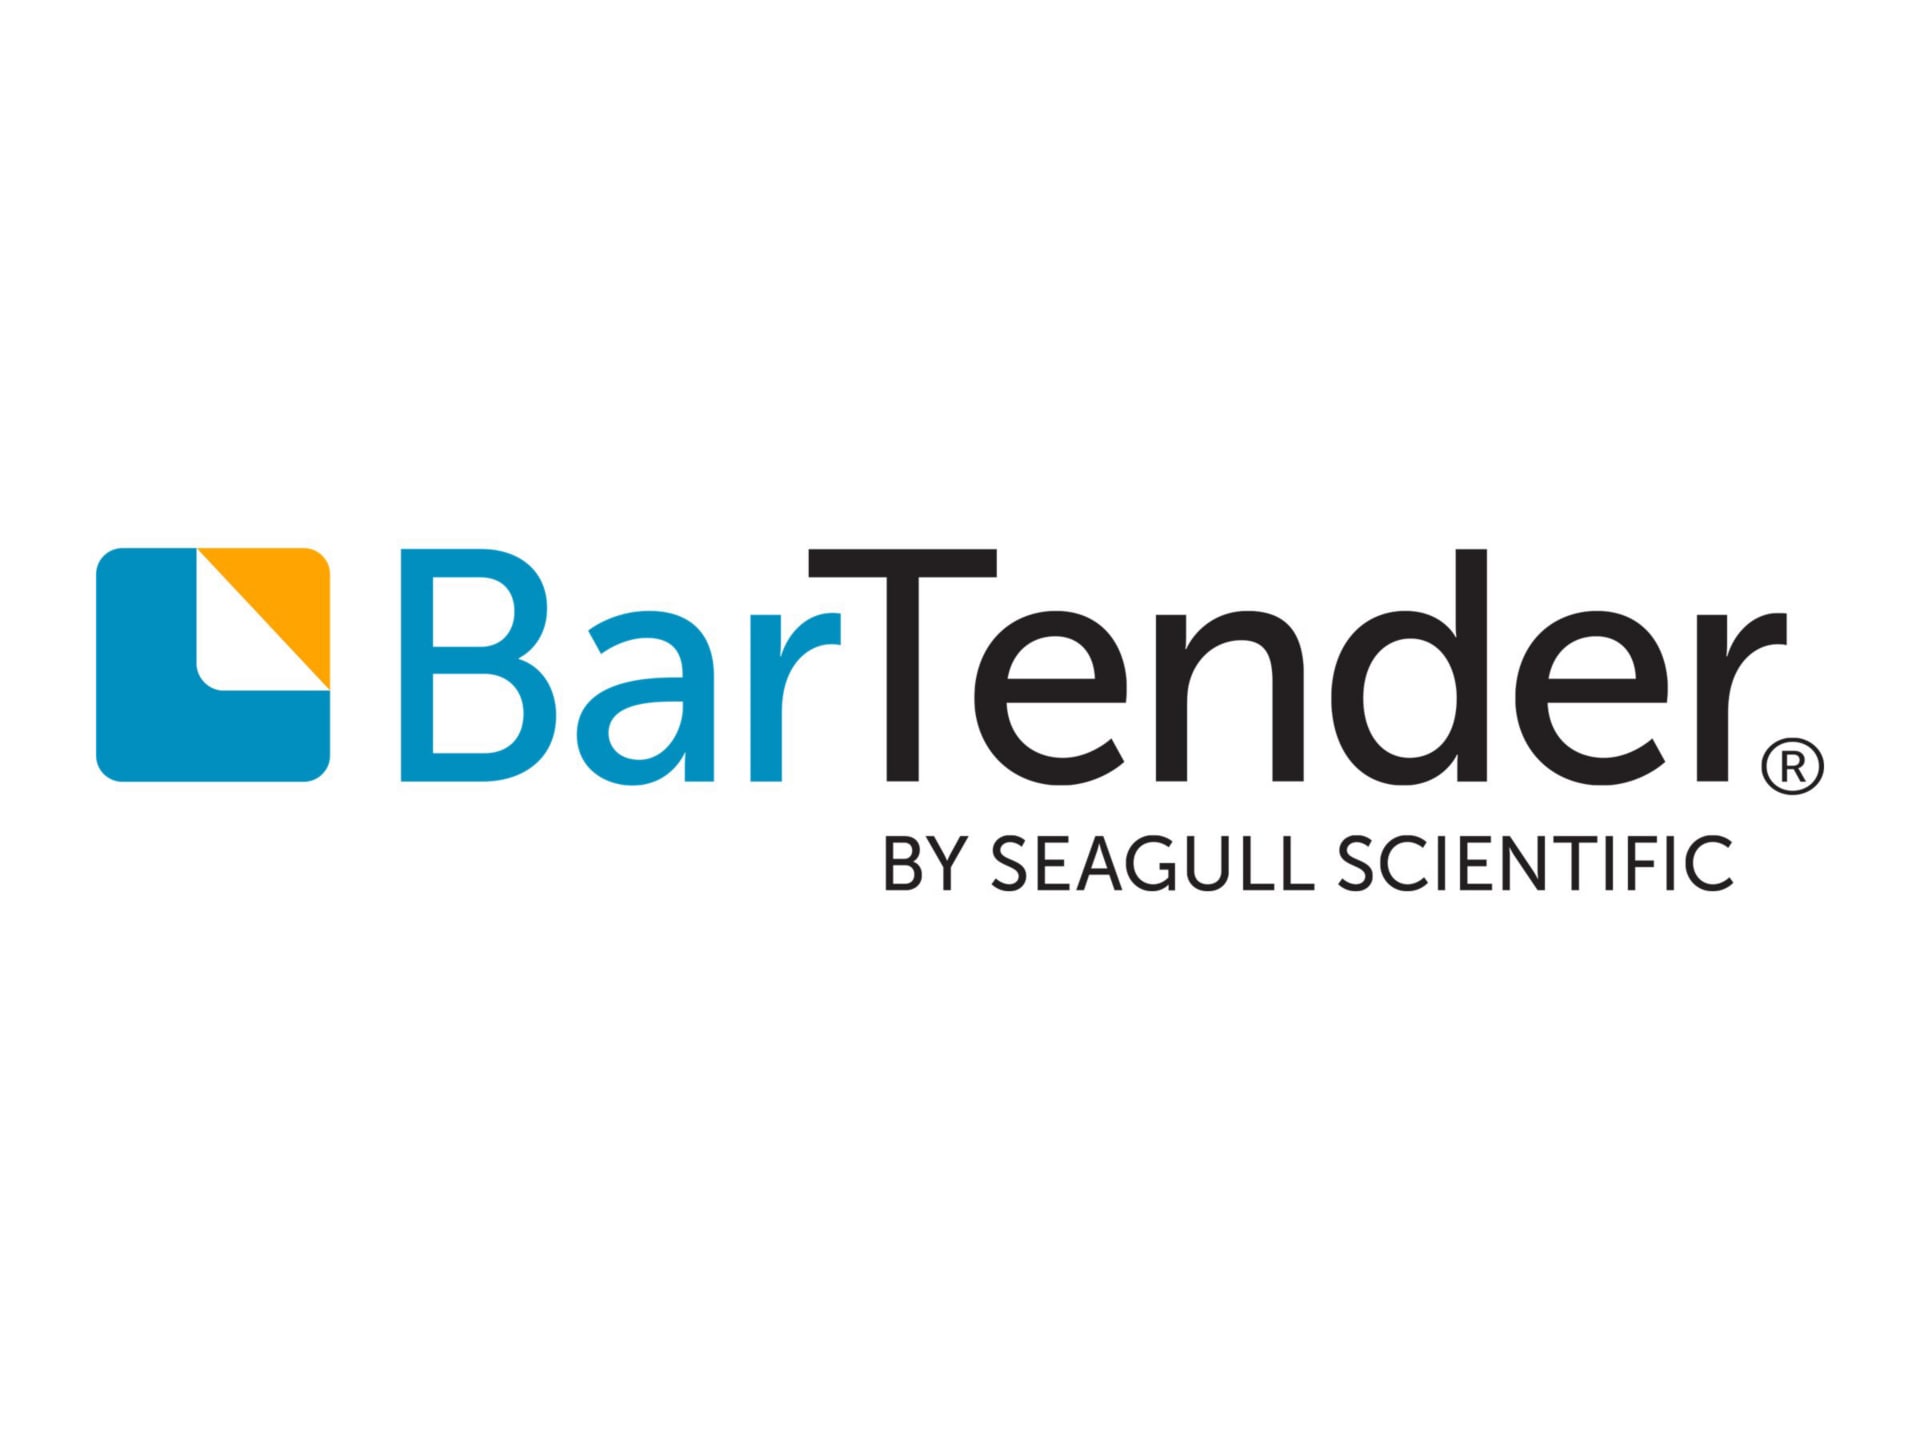 BarTender Enterprise Edition - upgrade license - 1 printer